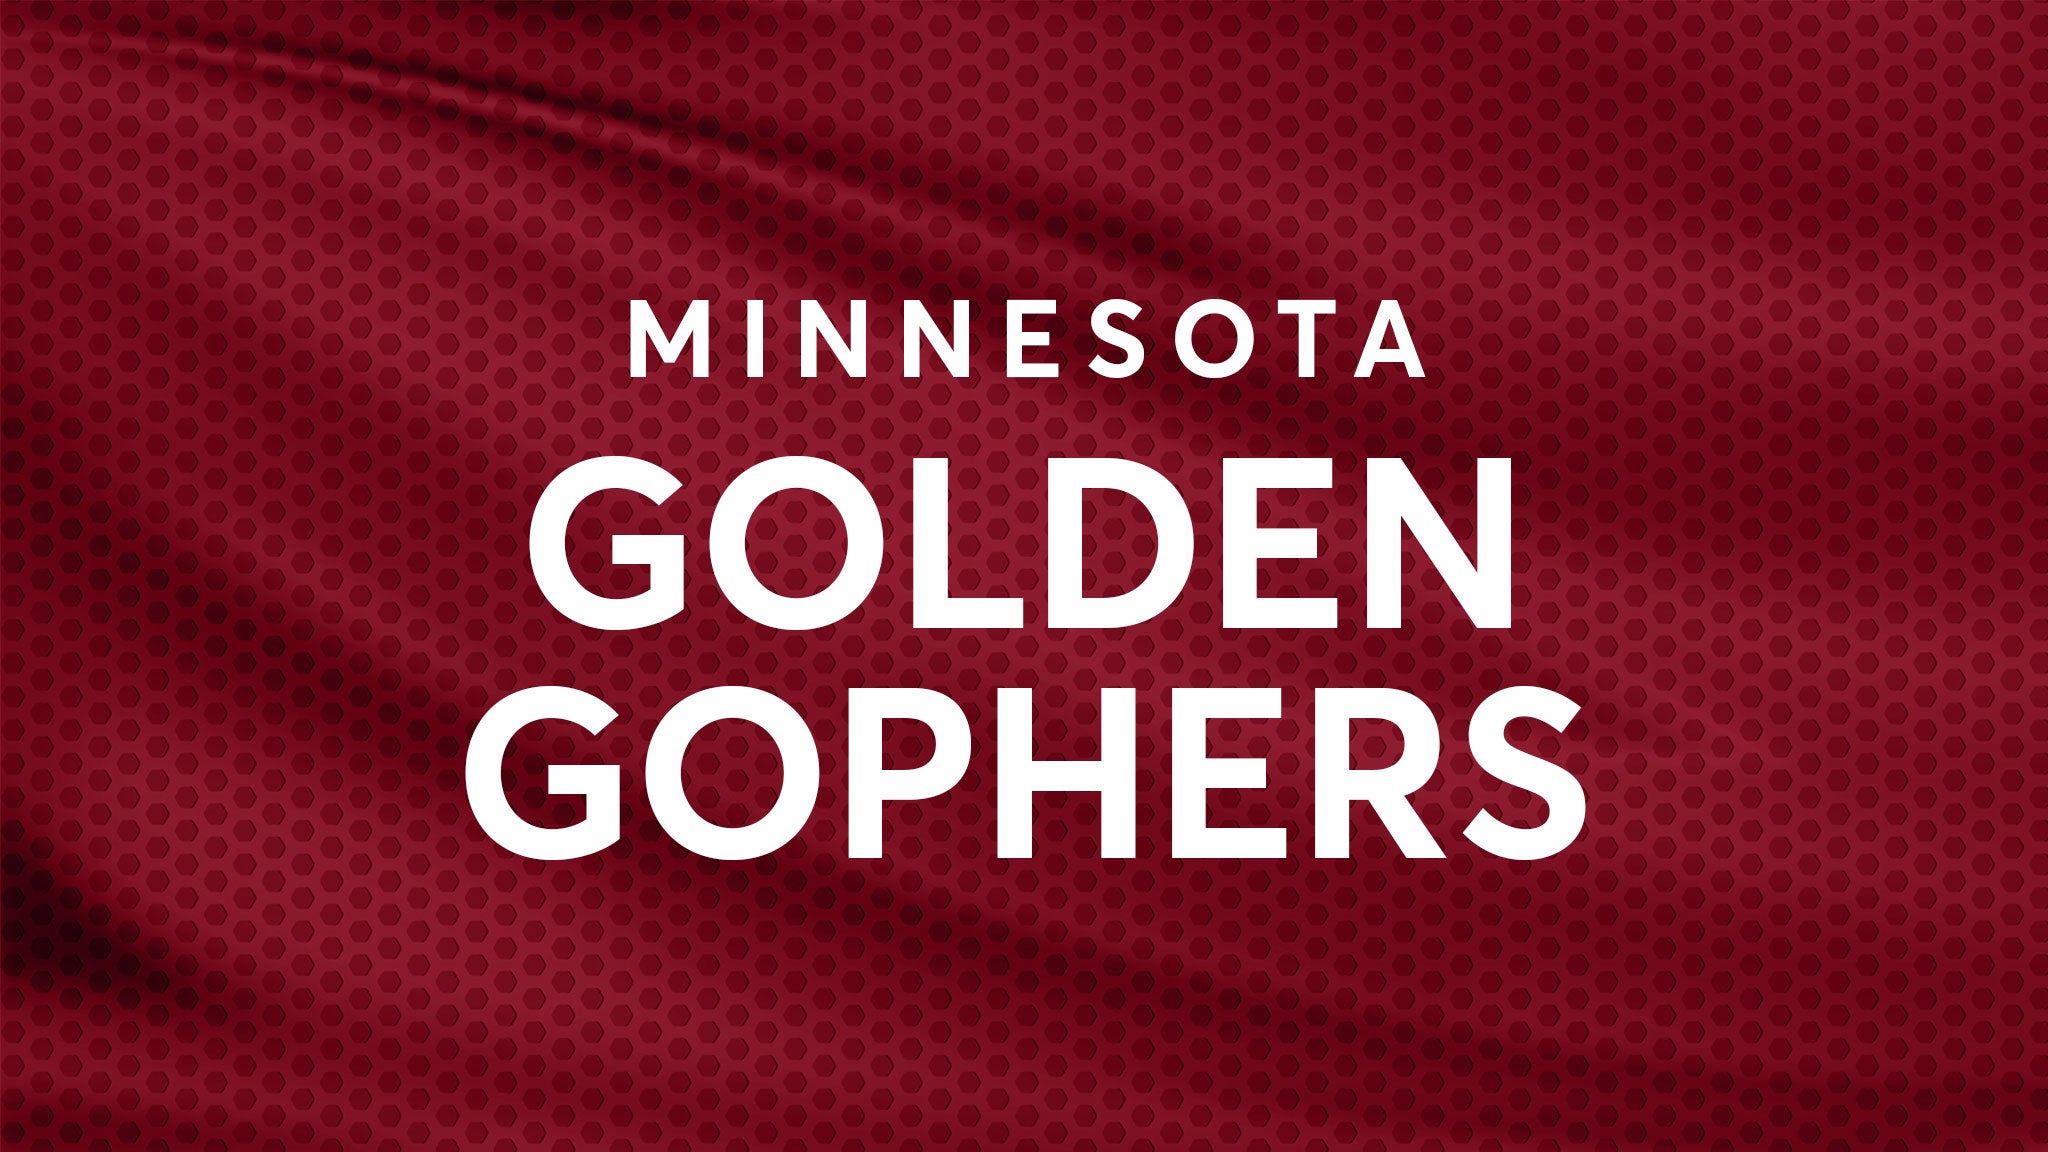 Minnesota Gophers Football vs. Iowa Hawkeyes Football hero